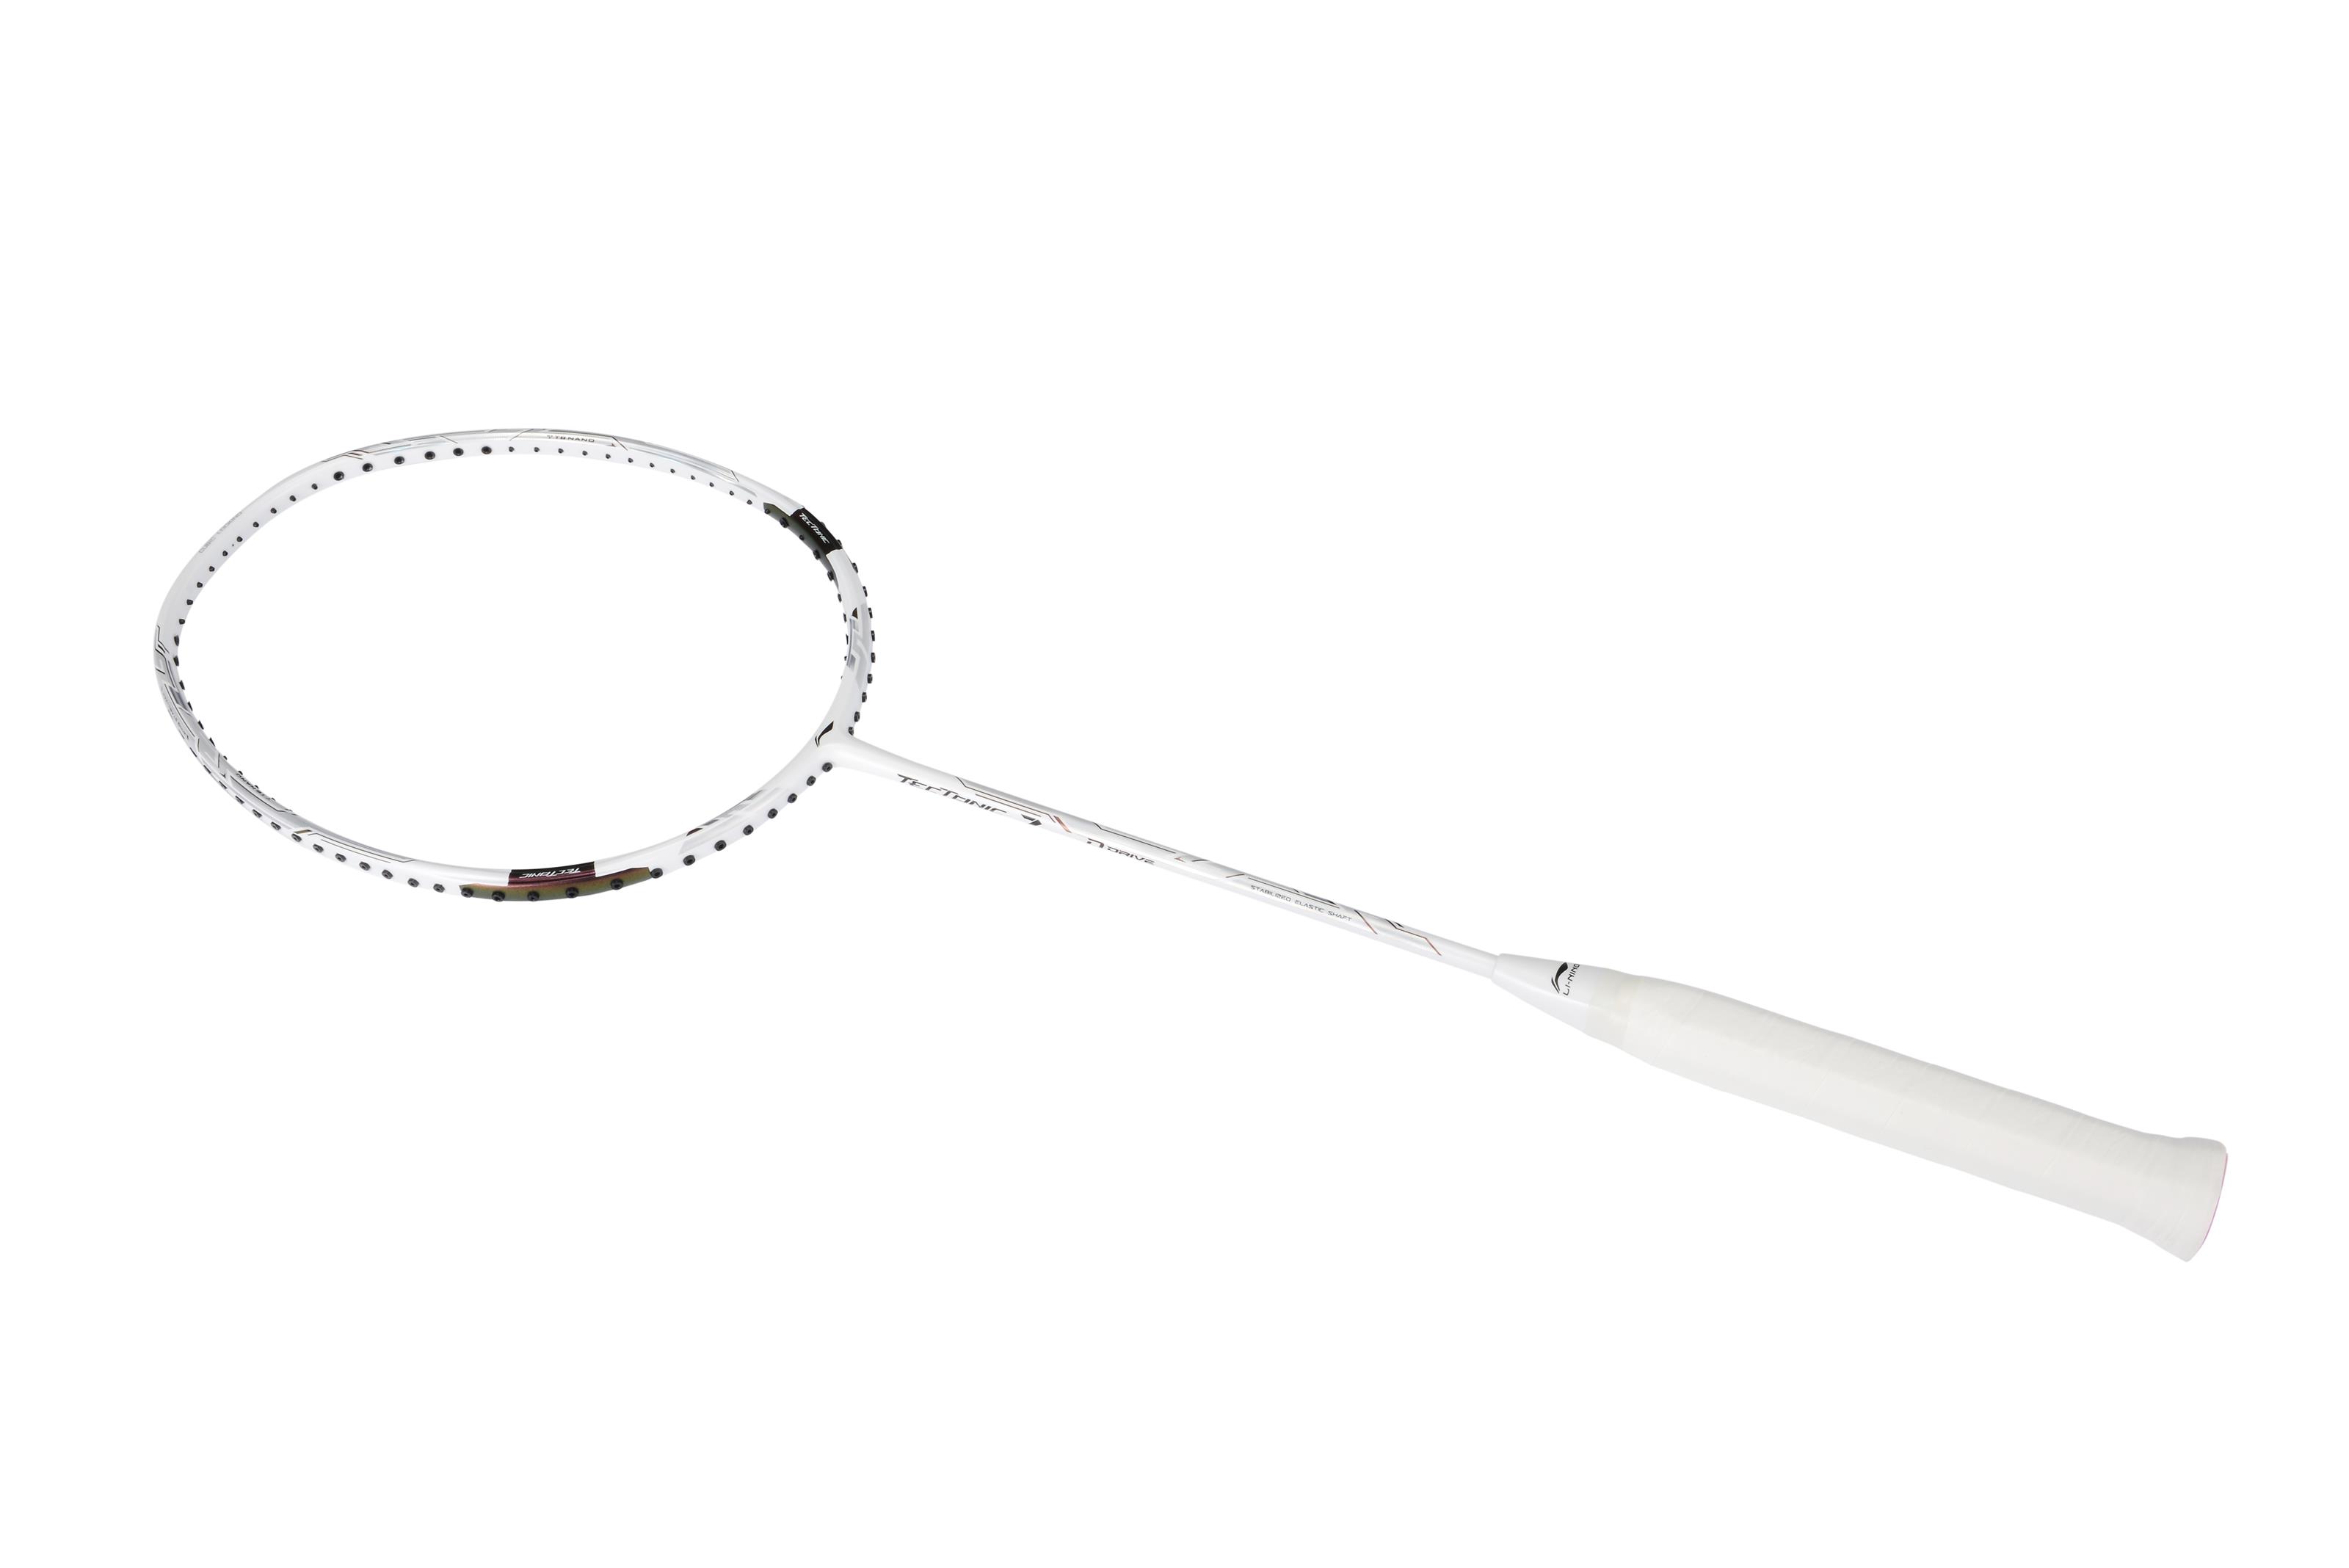 Li-Ning Badmintonschläger TecTonic 7 Drive unbespannt - AYPQ018-1